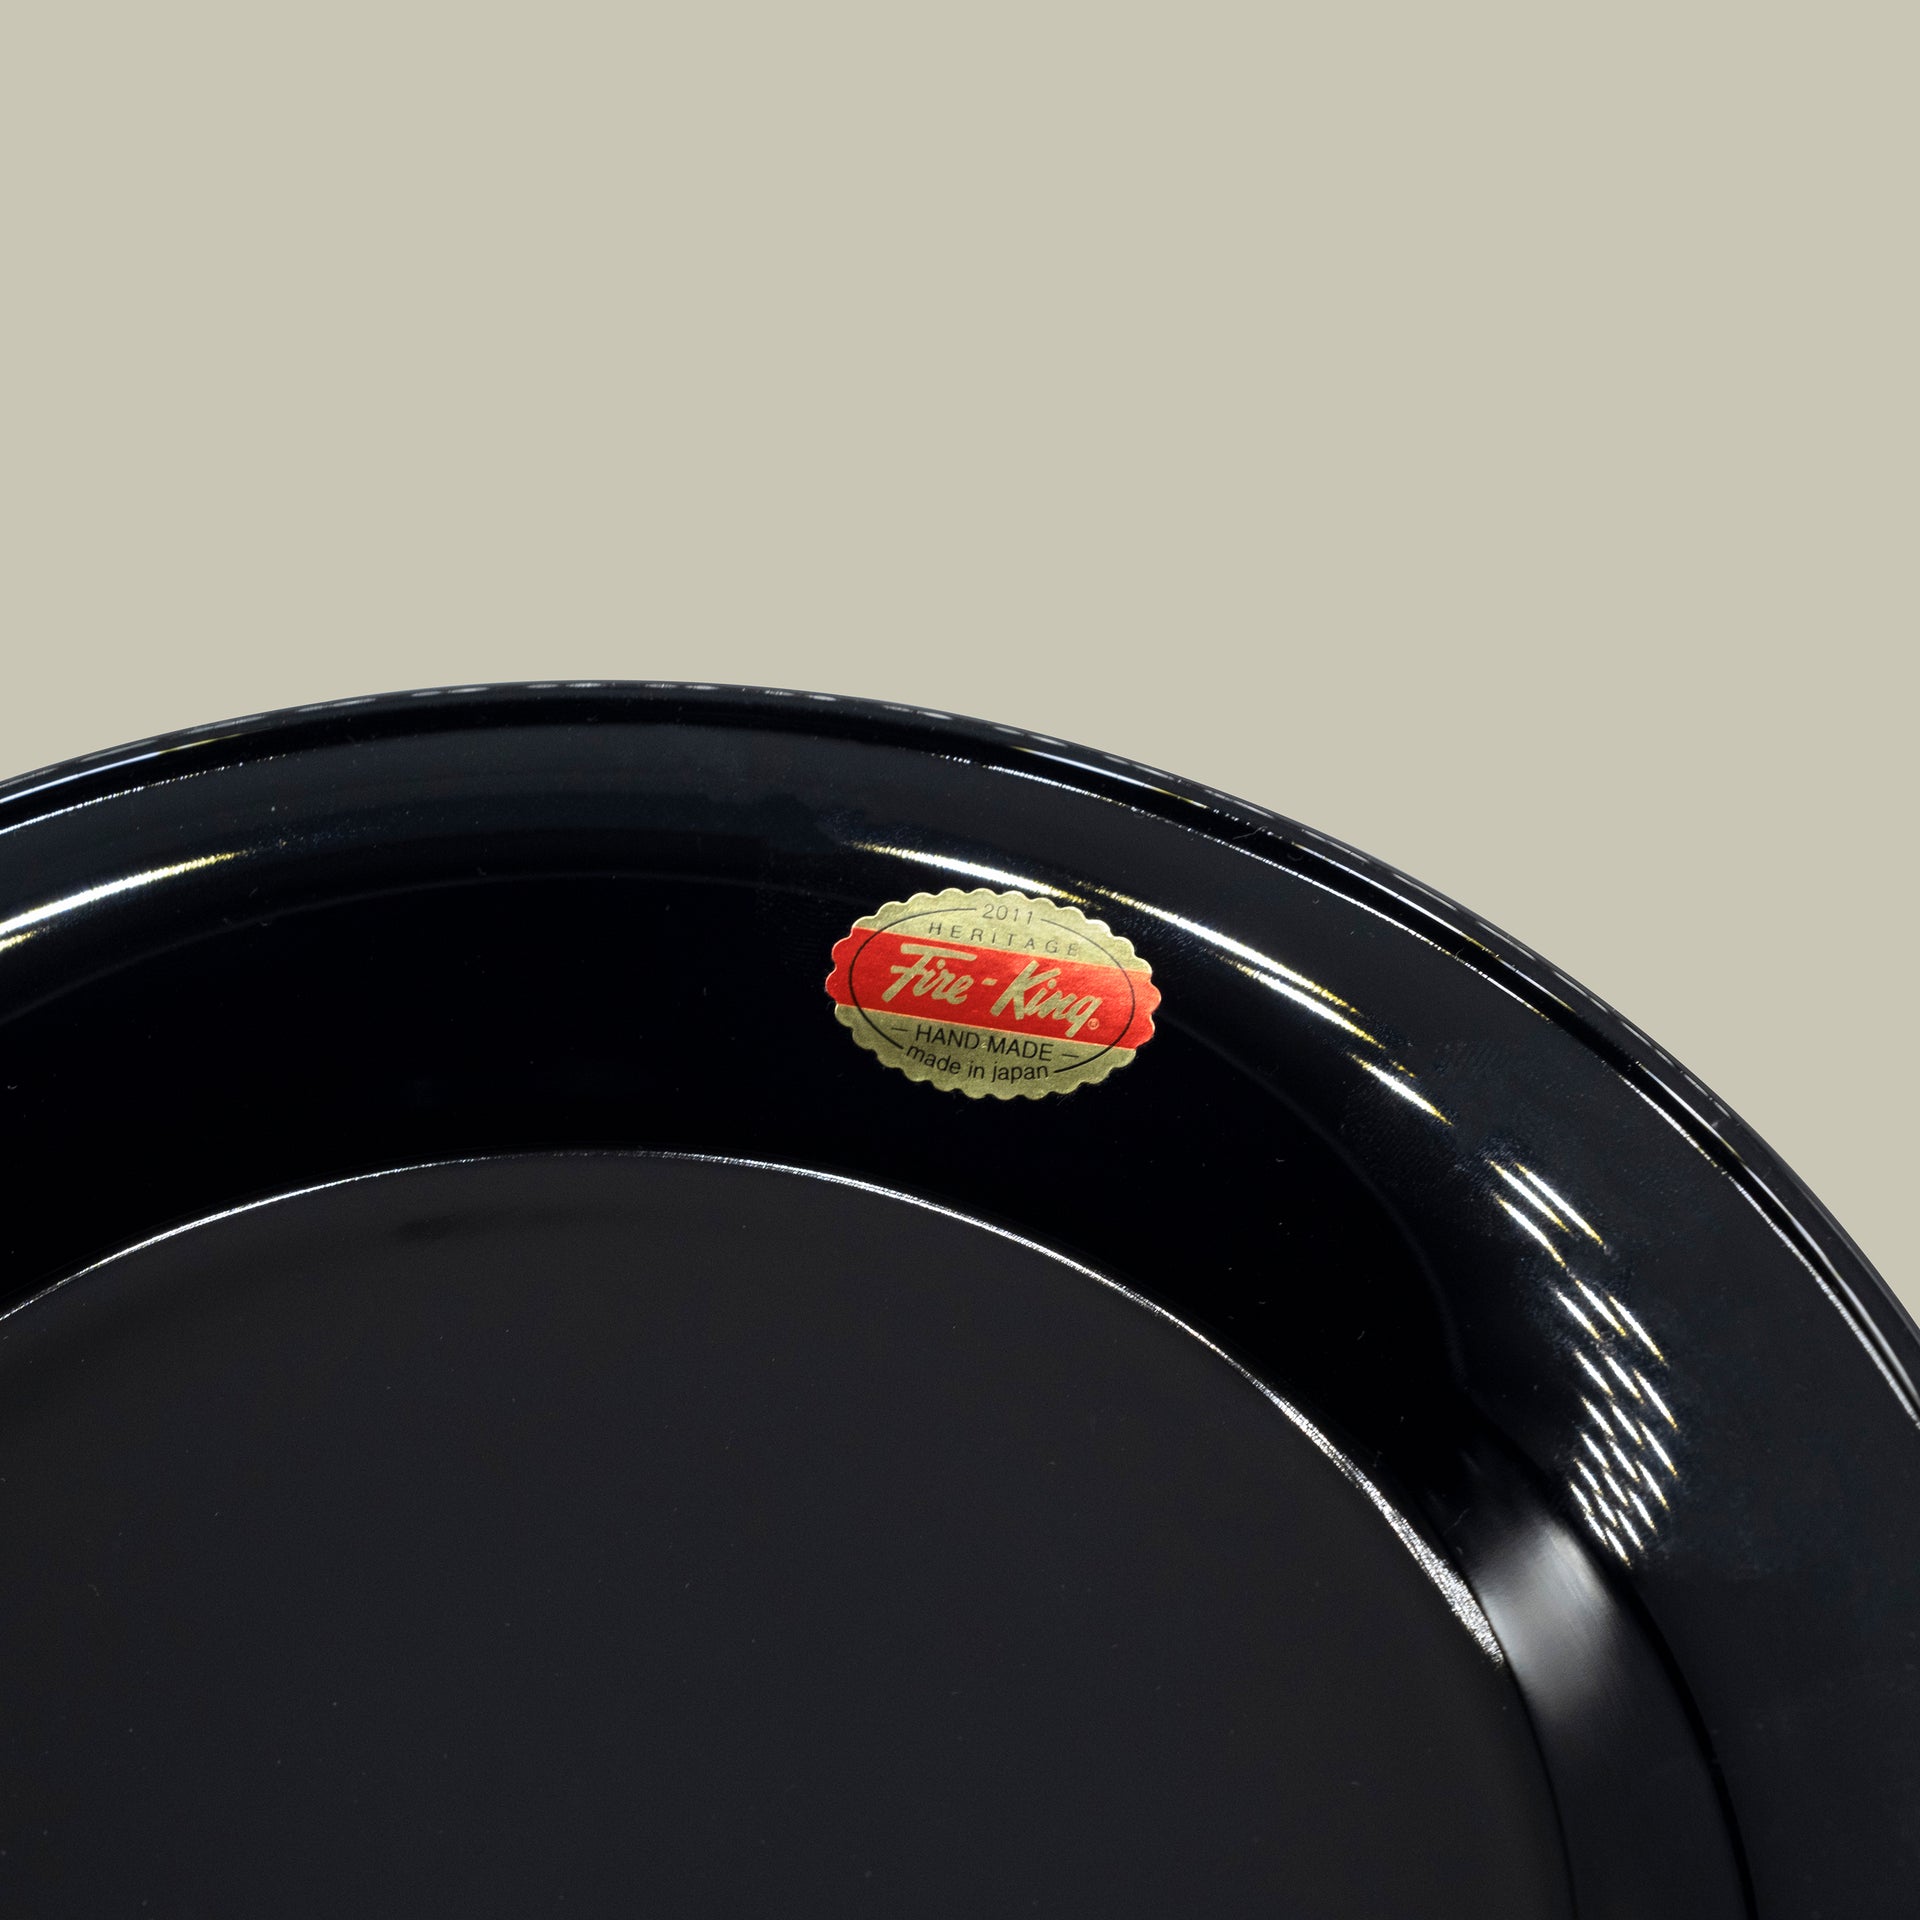 Fire-King Japan - Lunch Plate in Black